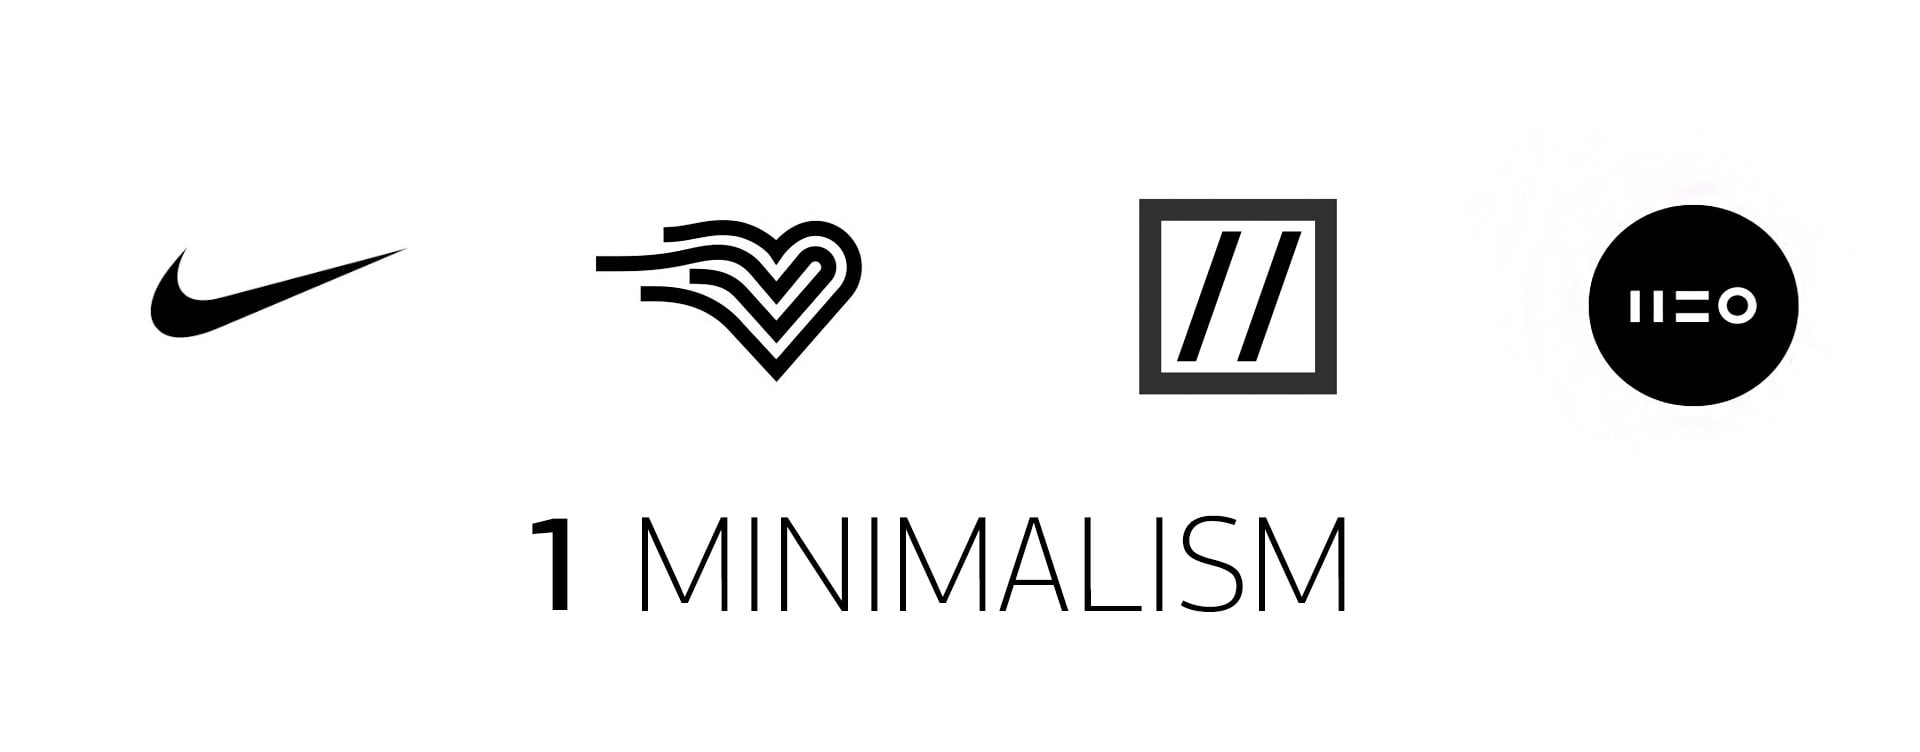 Минимализм стиль логотипа Minimalism logo style